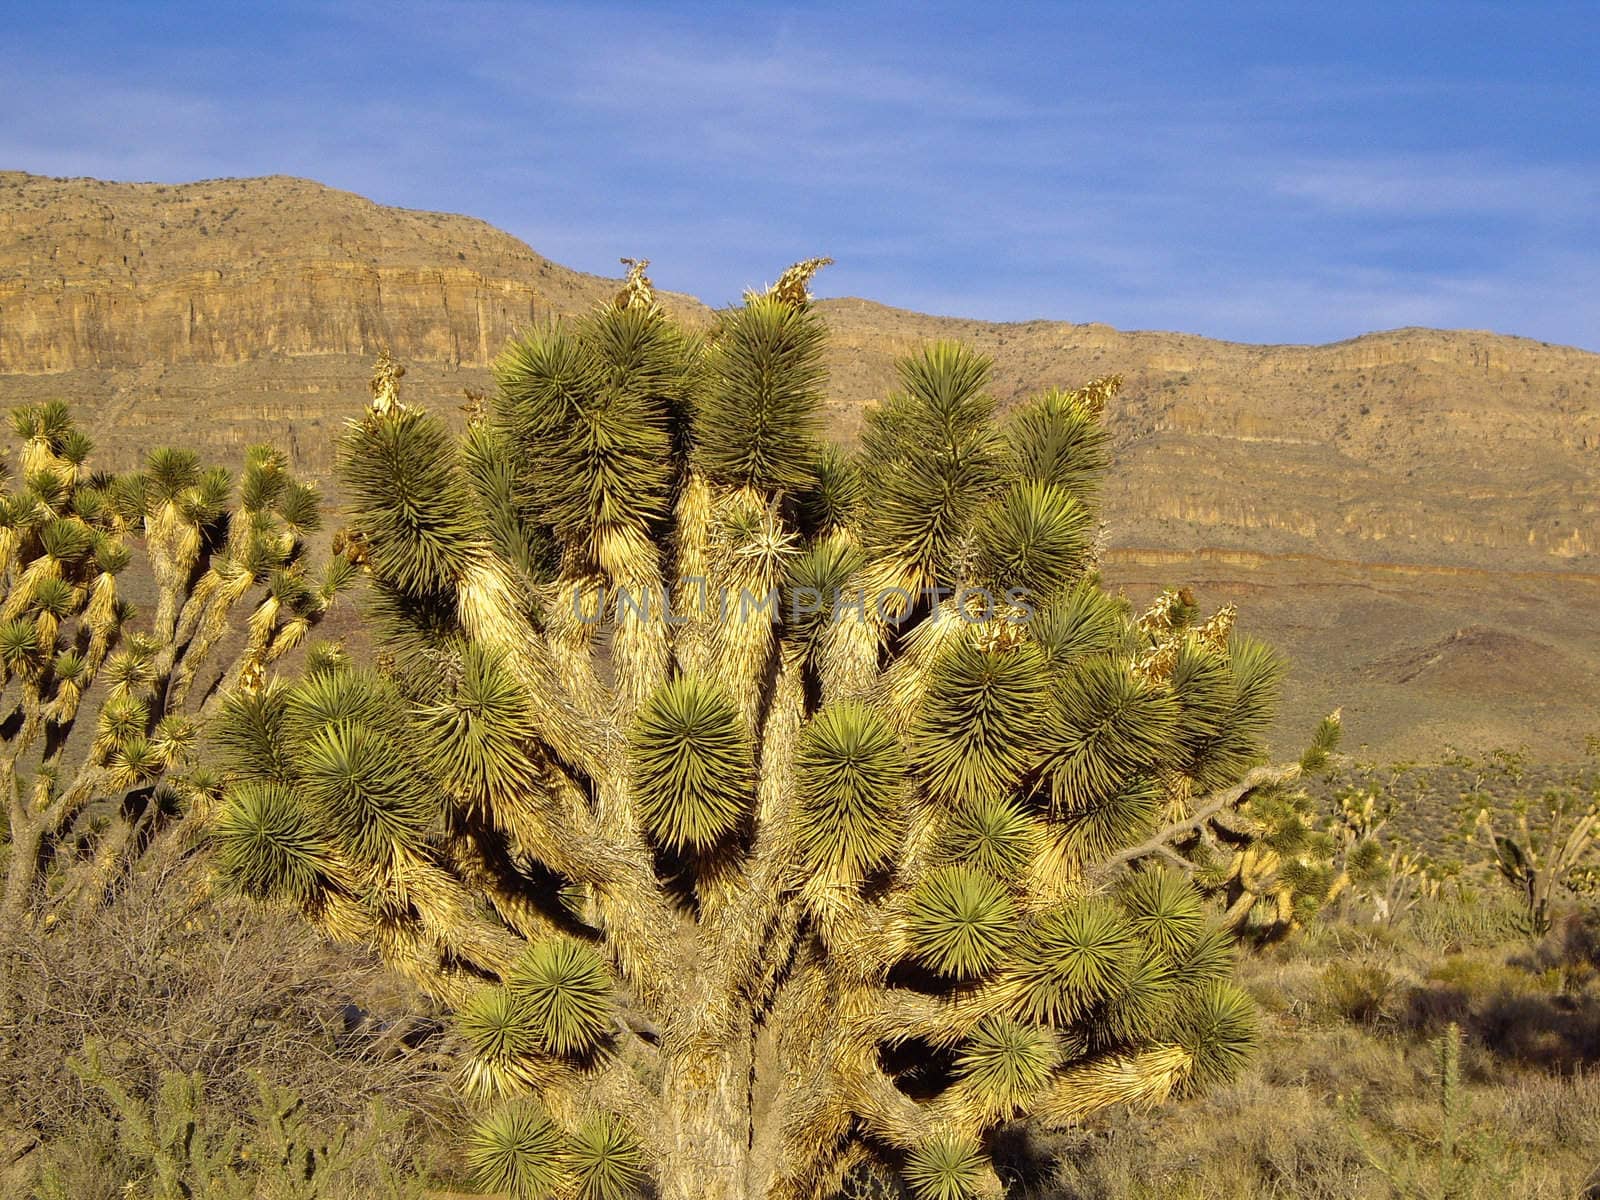 Joshua tree in desert landscape Arizona USA